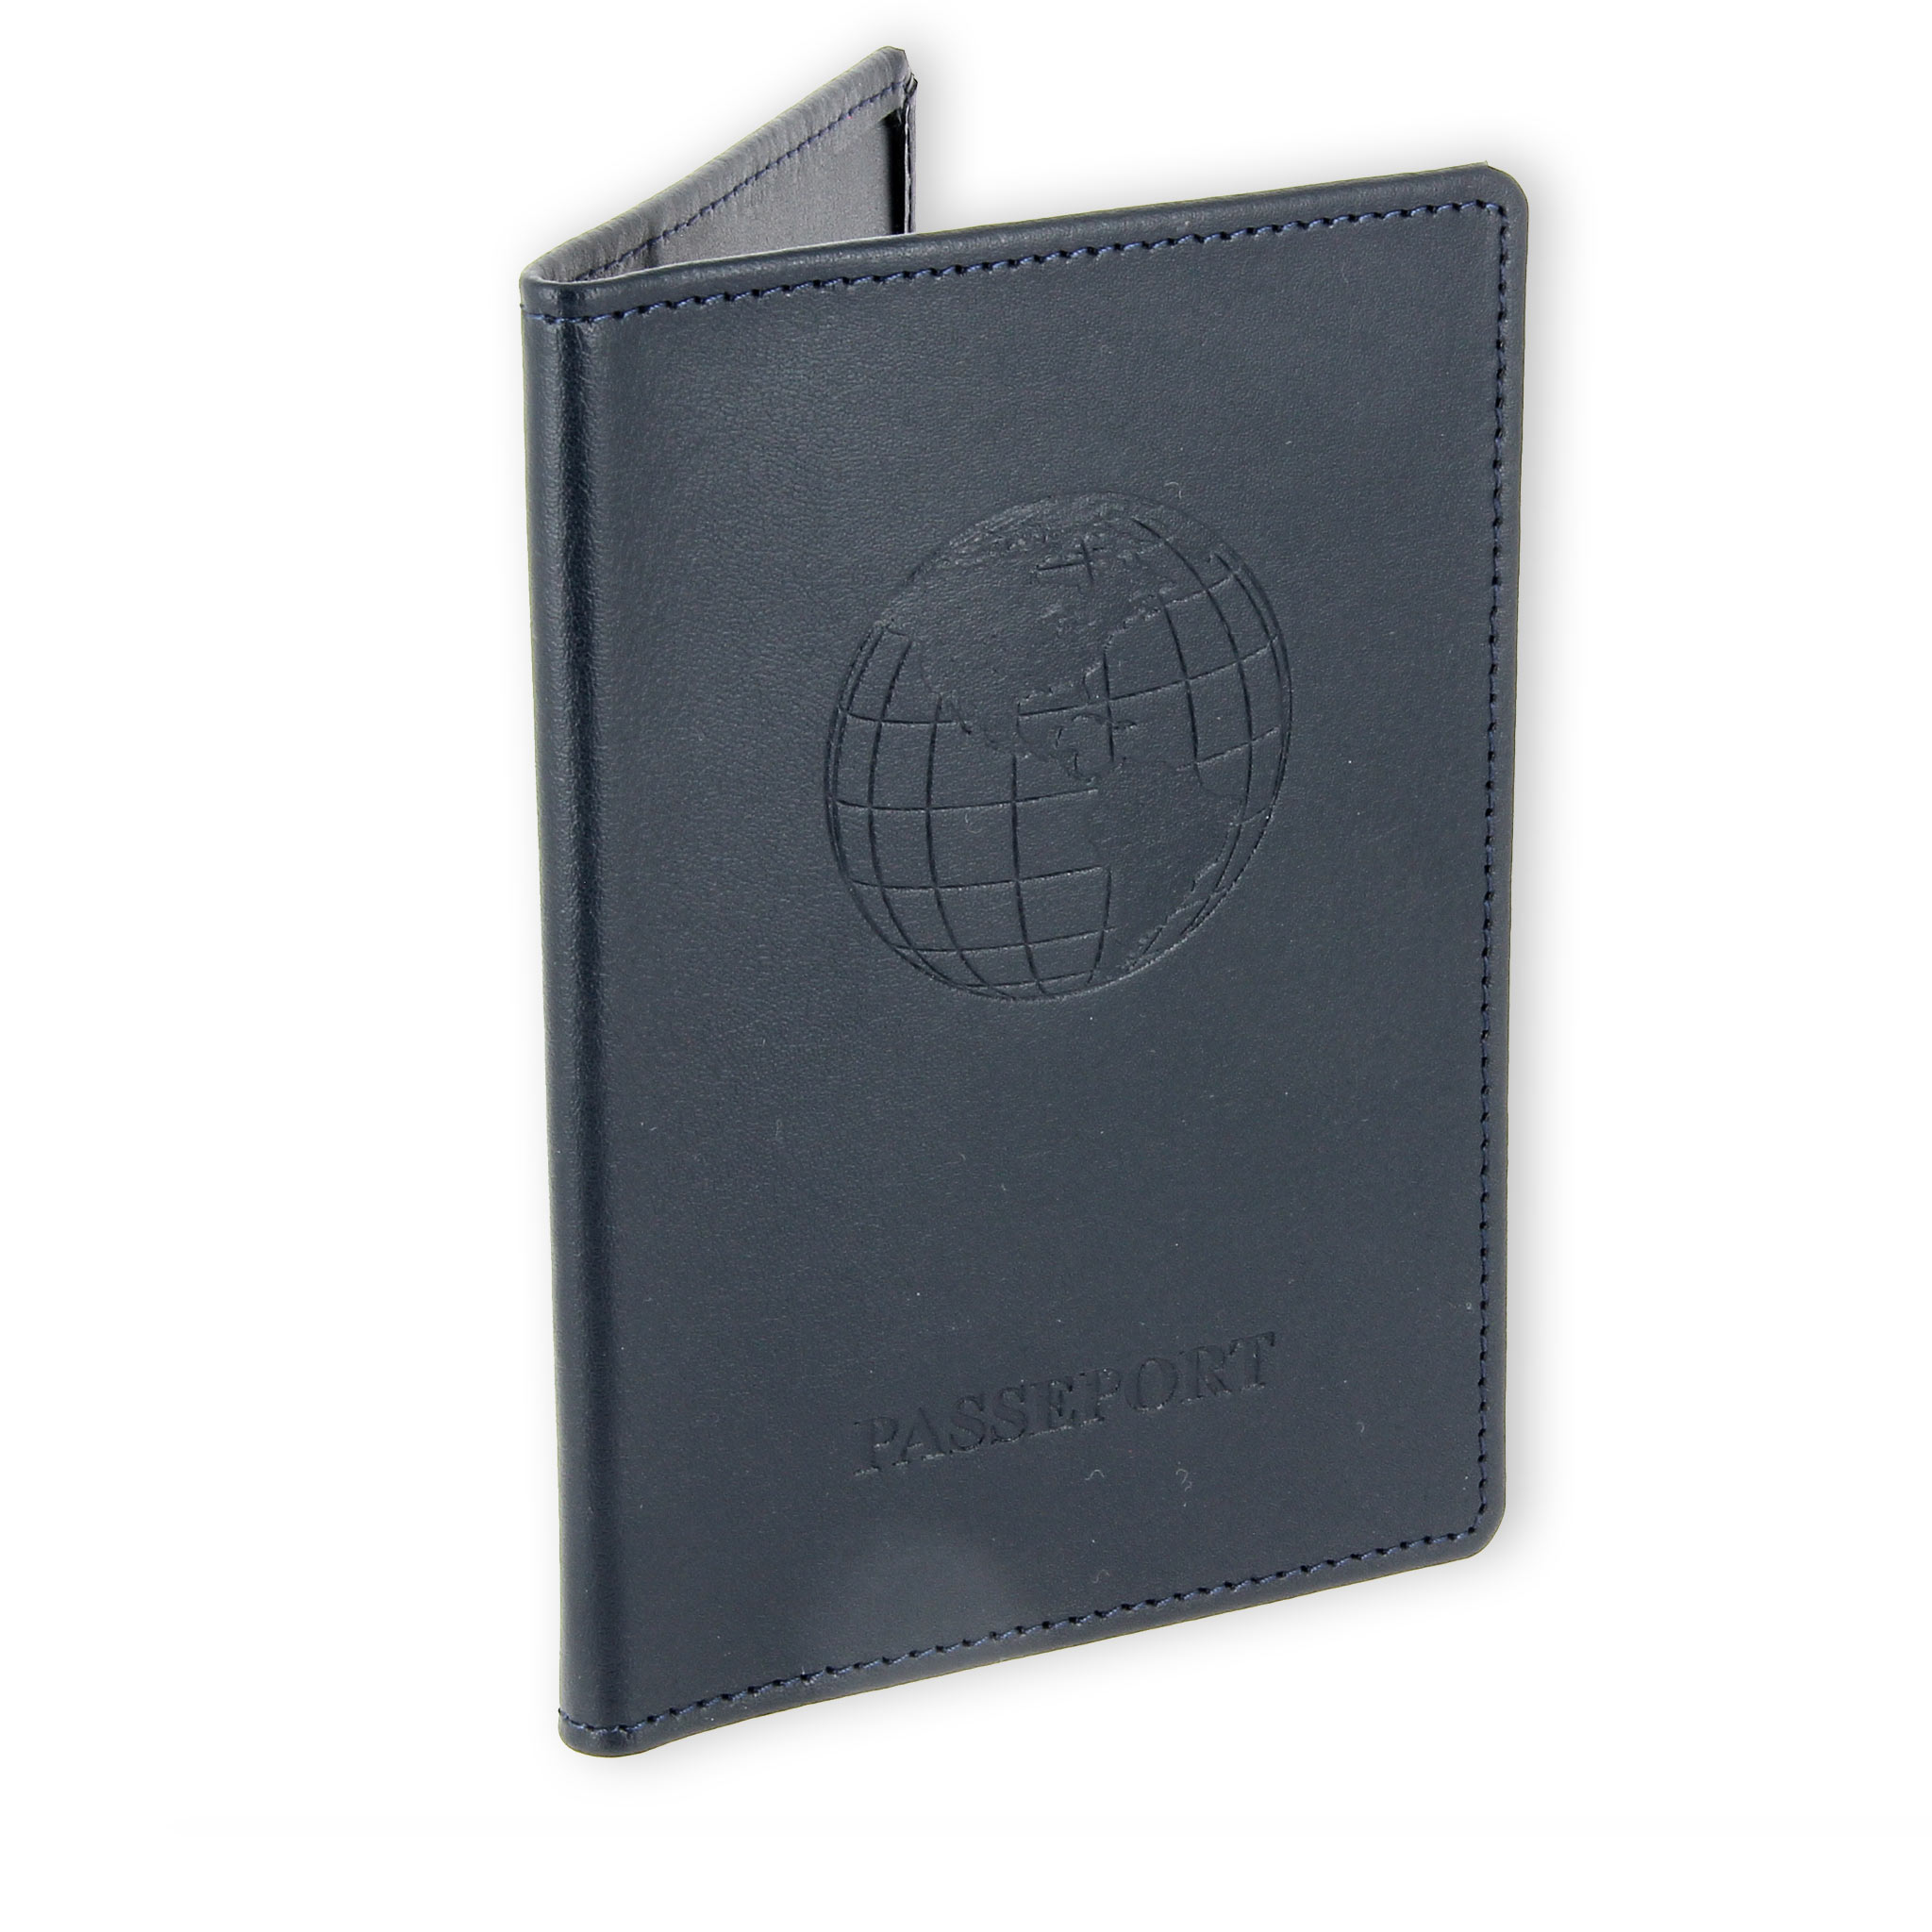 Protège passeport en cuir bleu marine - 14 x 10,5 cm - Marquage drakkar